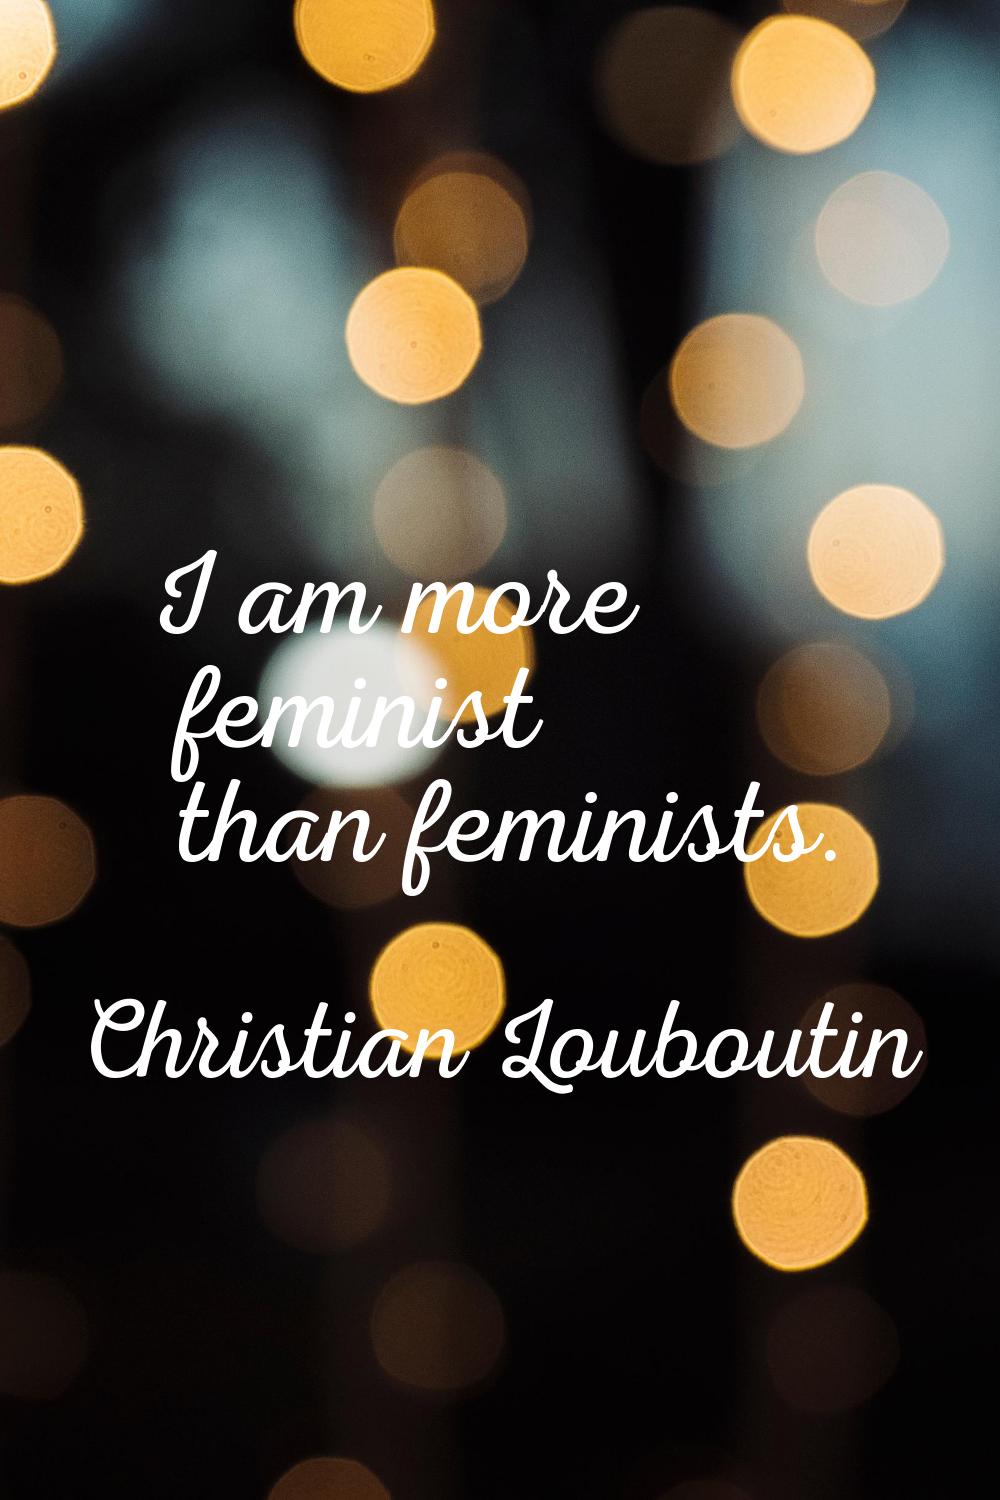 I am more feminist than feminists.